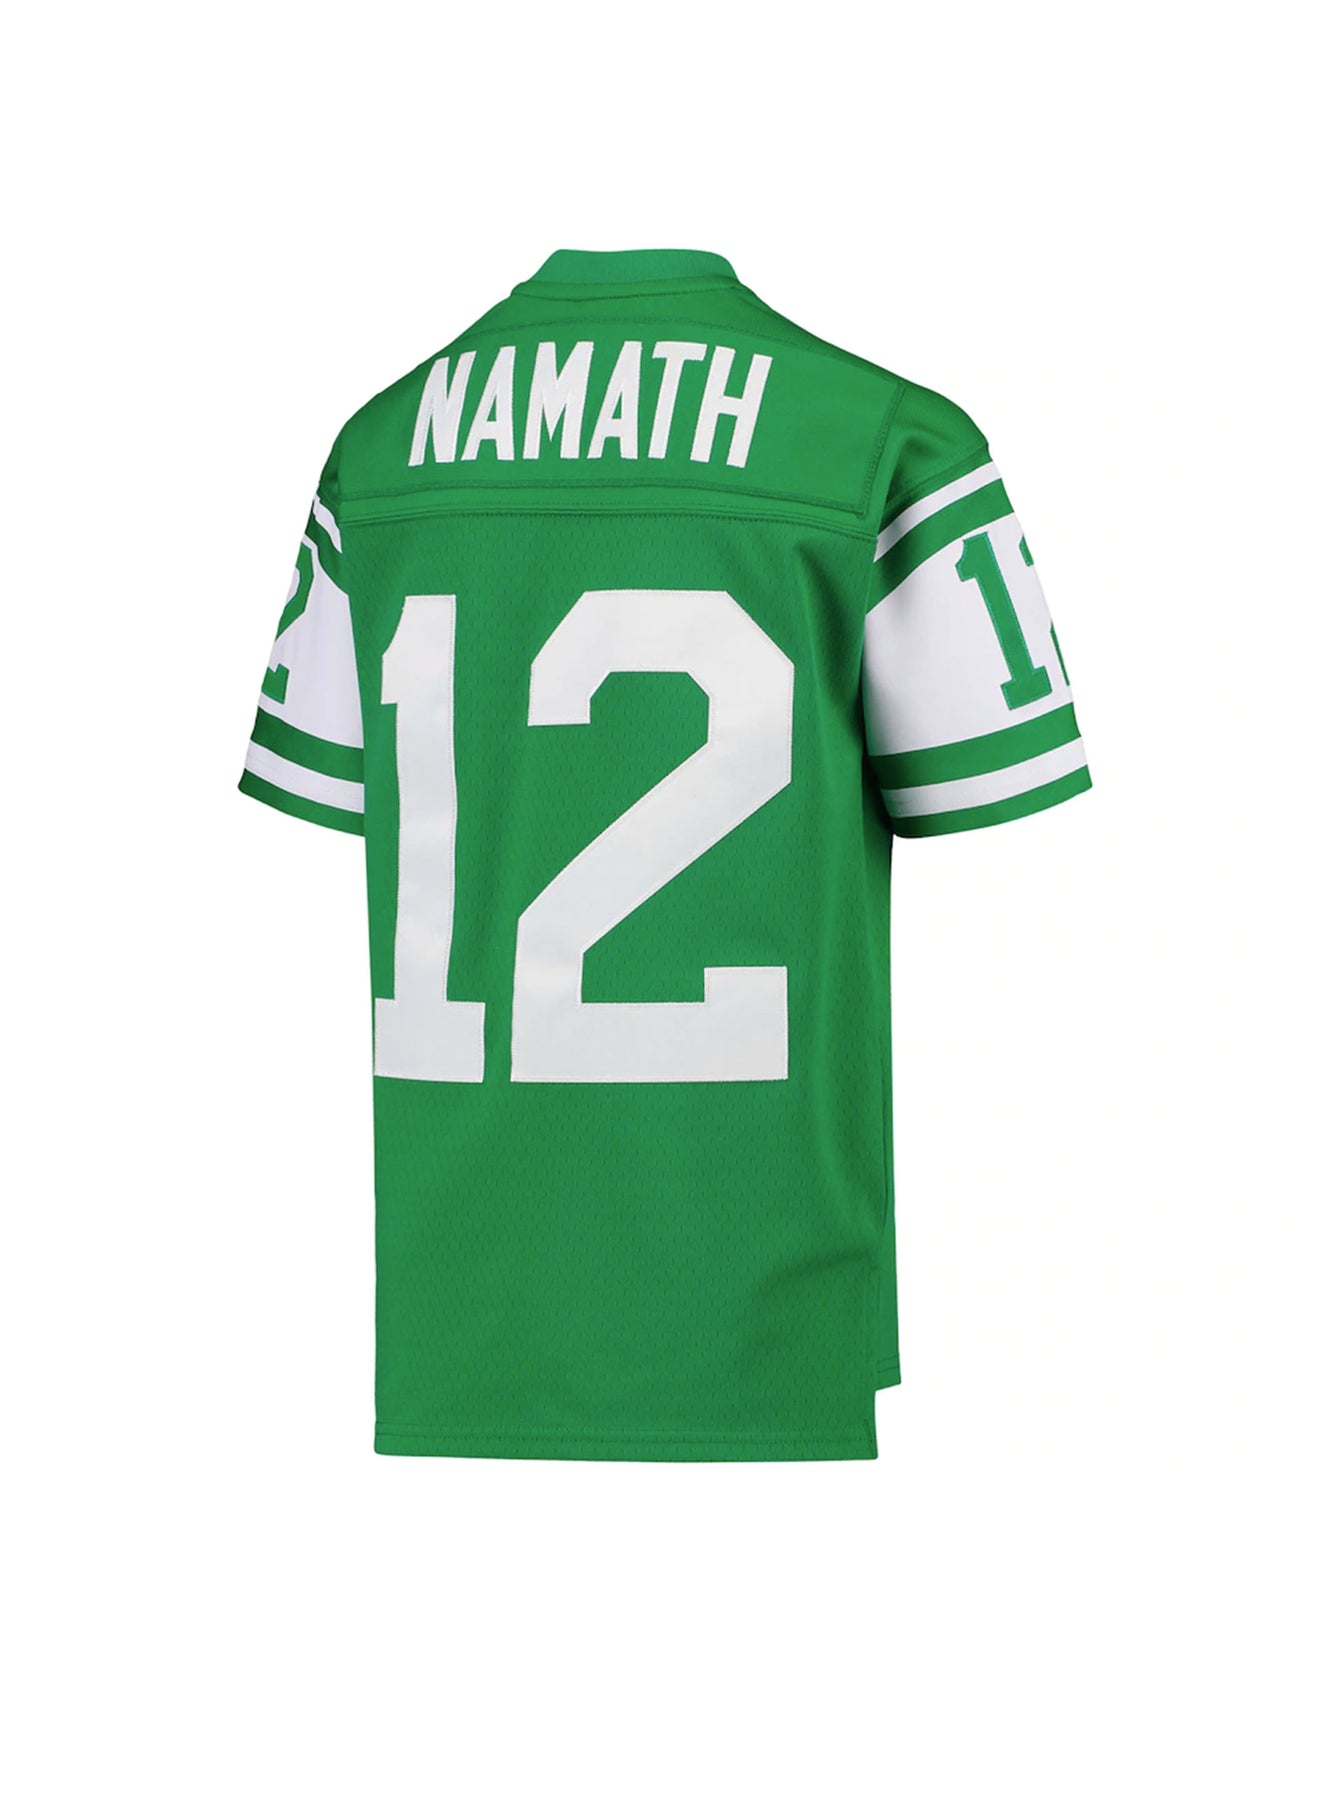 Joe Namath #12 New York Jets 1968 Authentic Throwback NFL Jersey